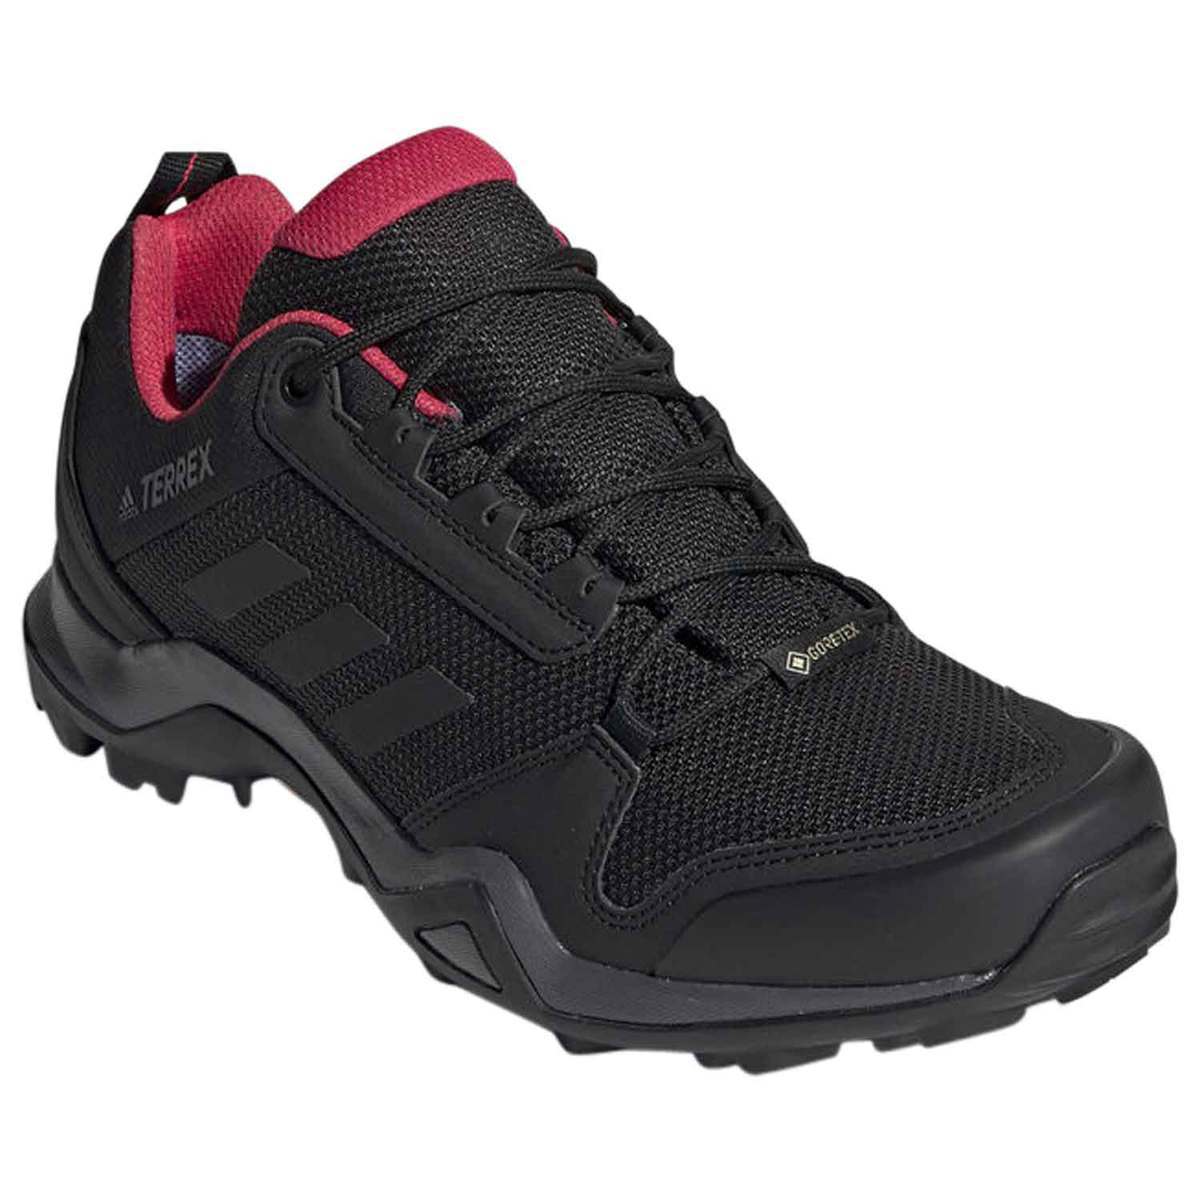 Adidas Women's Terrex AX3 GTX Athletic Shoes - Carbon - Size 11 ...